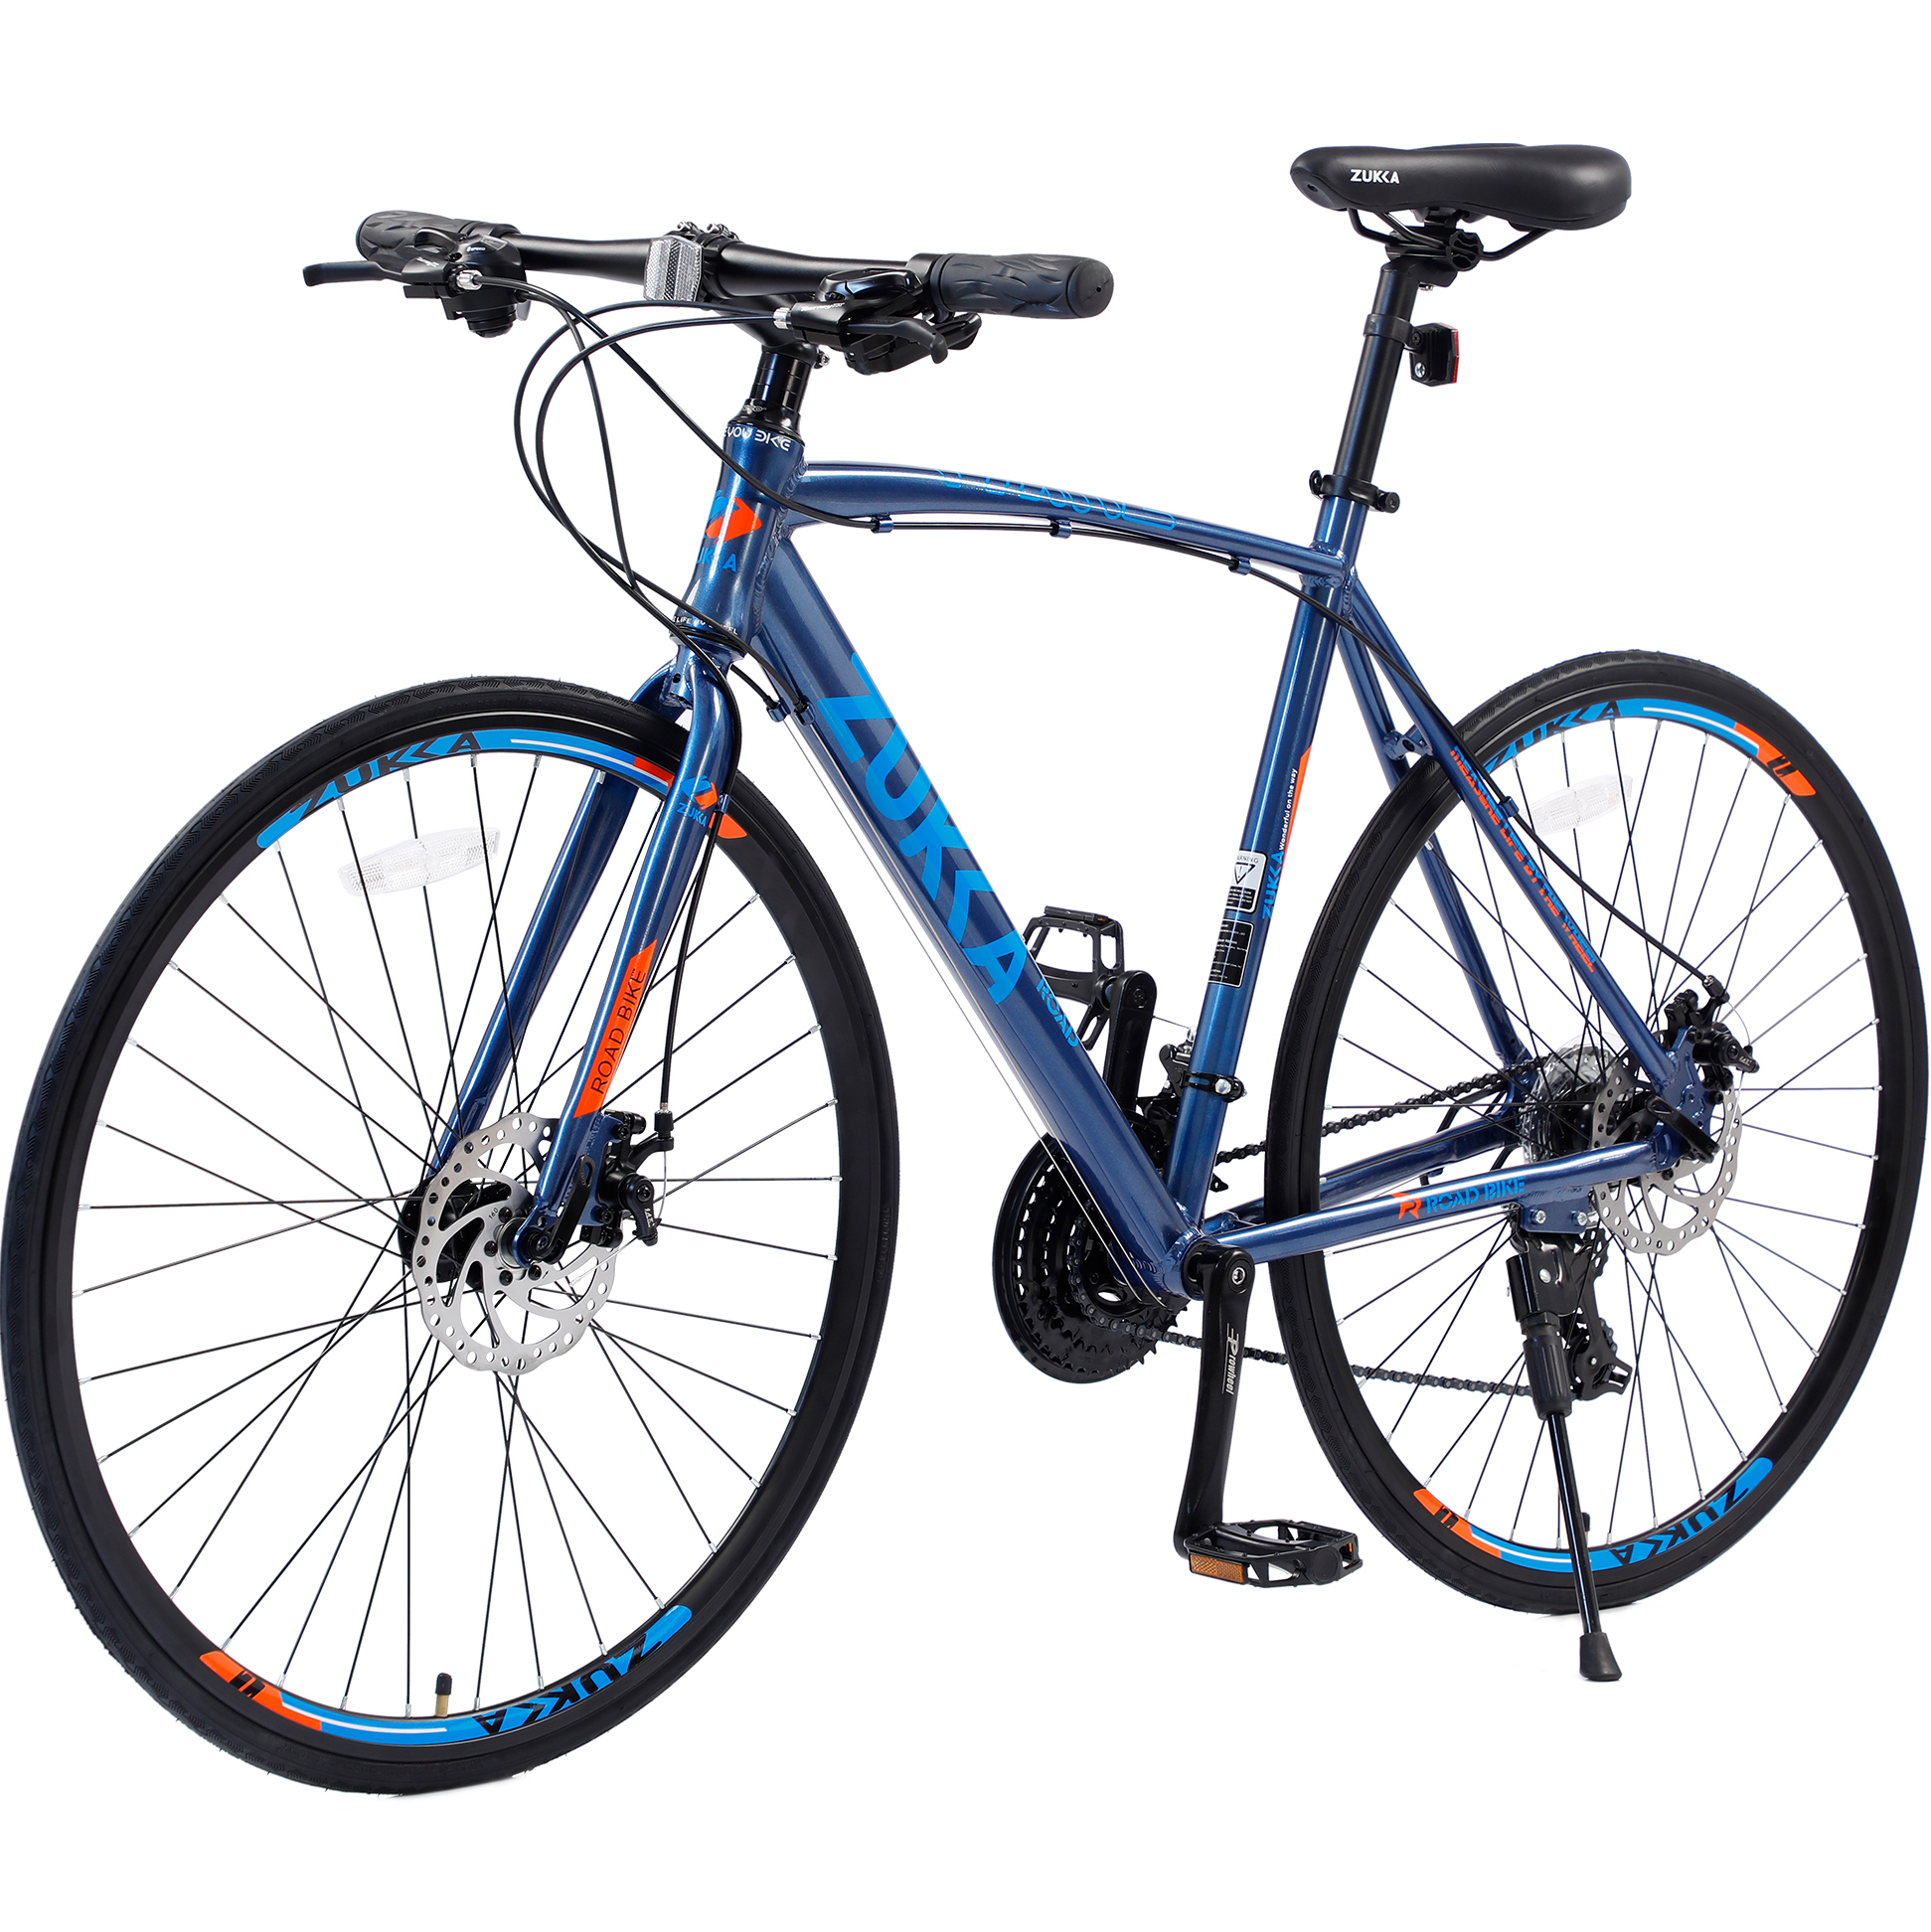 24 Speed Road Bike for Men Women, 700C Aluminum Flat Bar Road Bike with Disc Brakes, Blue - image 1 of 6